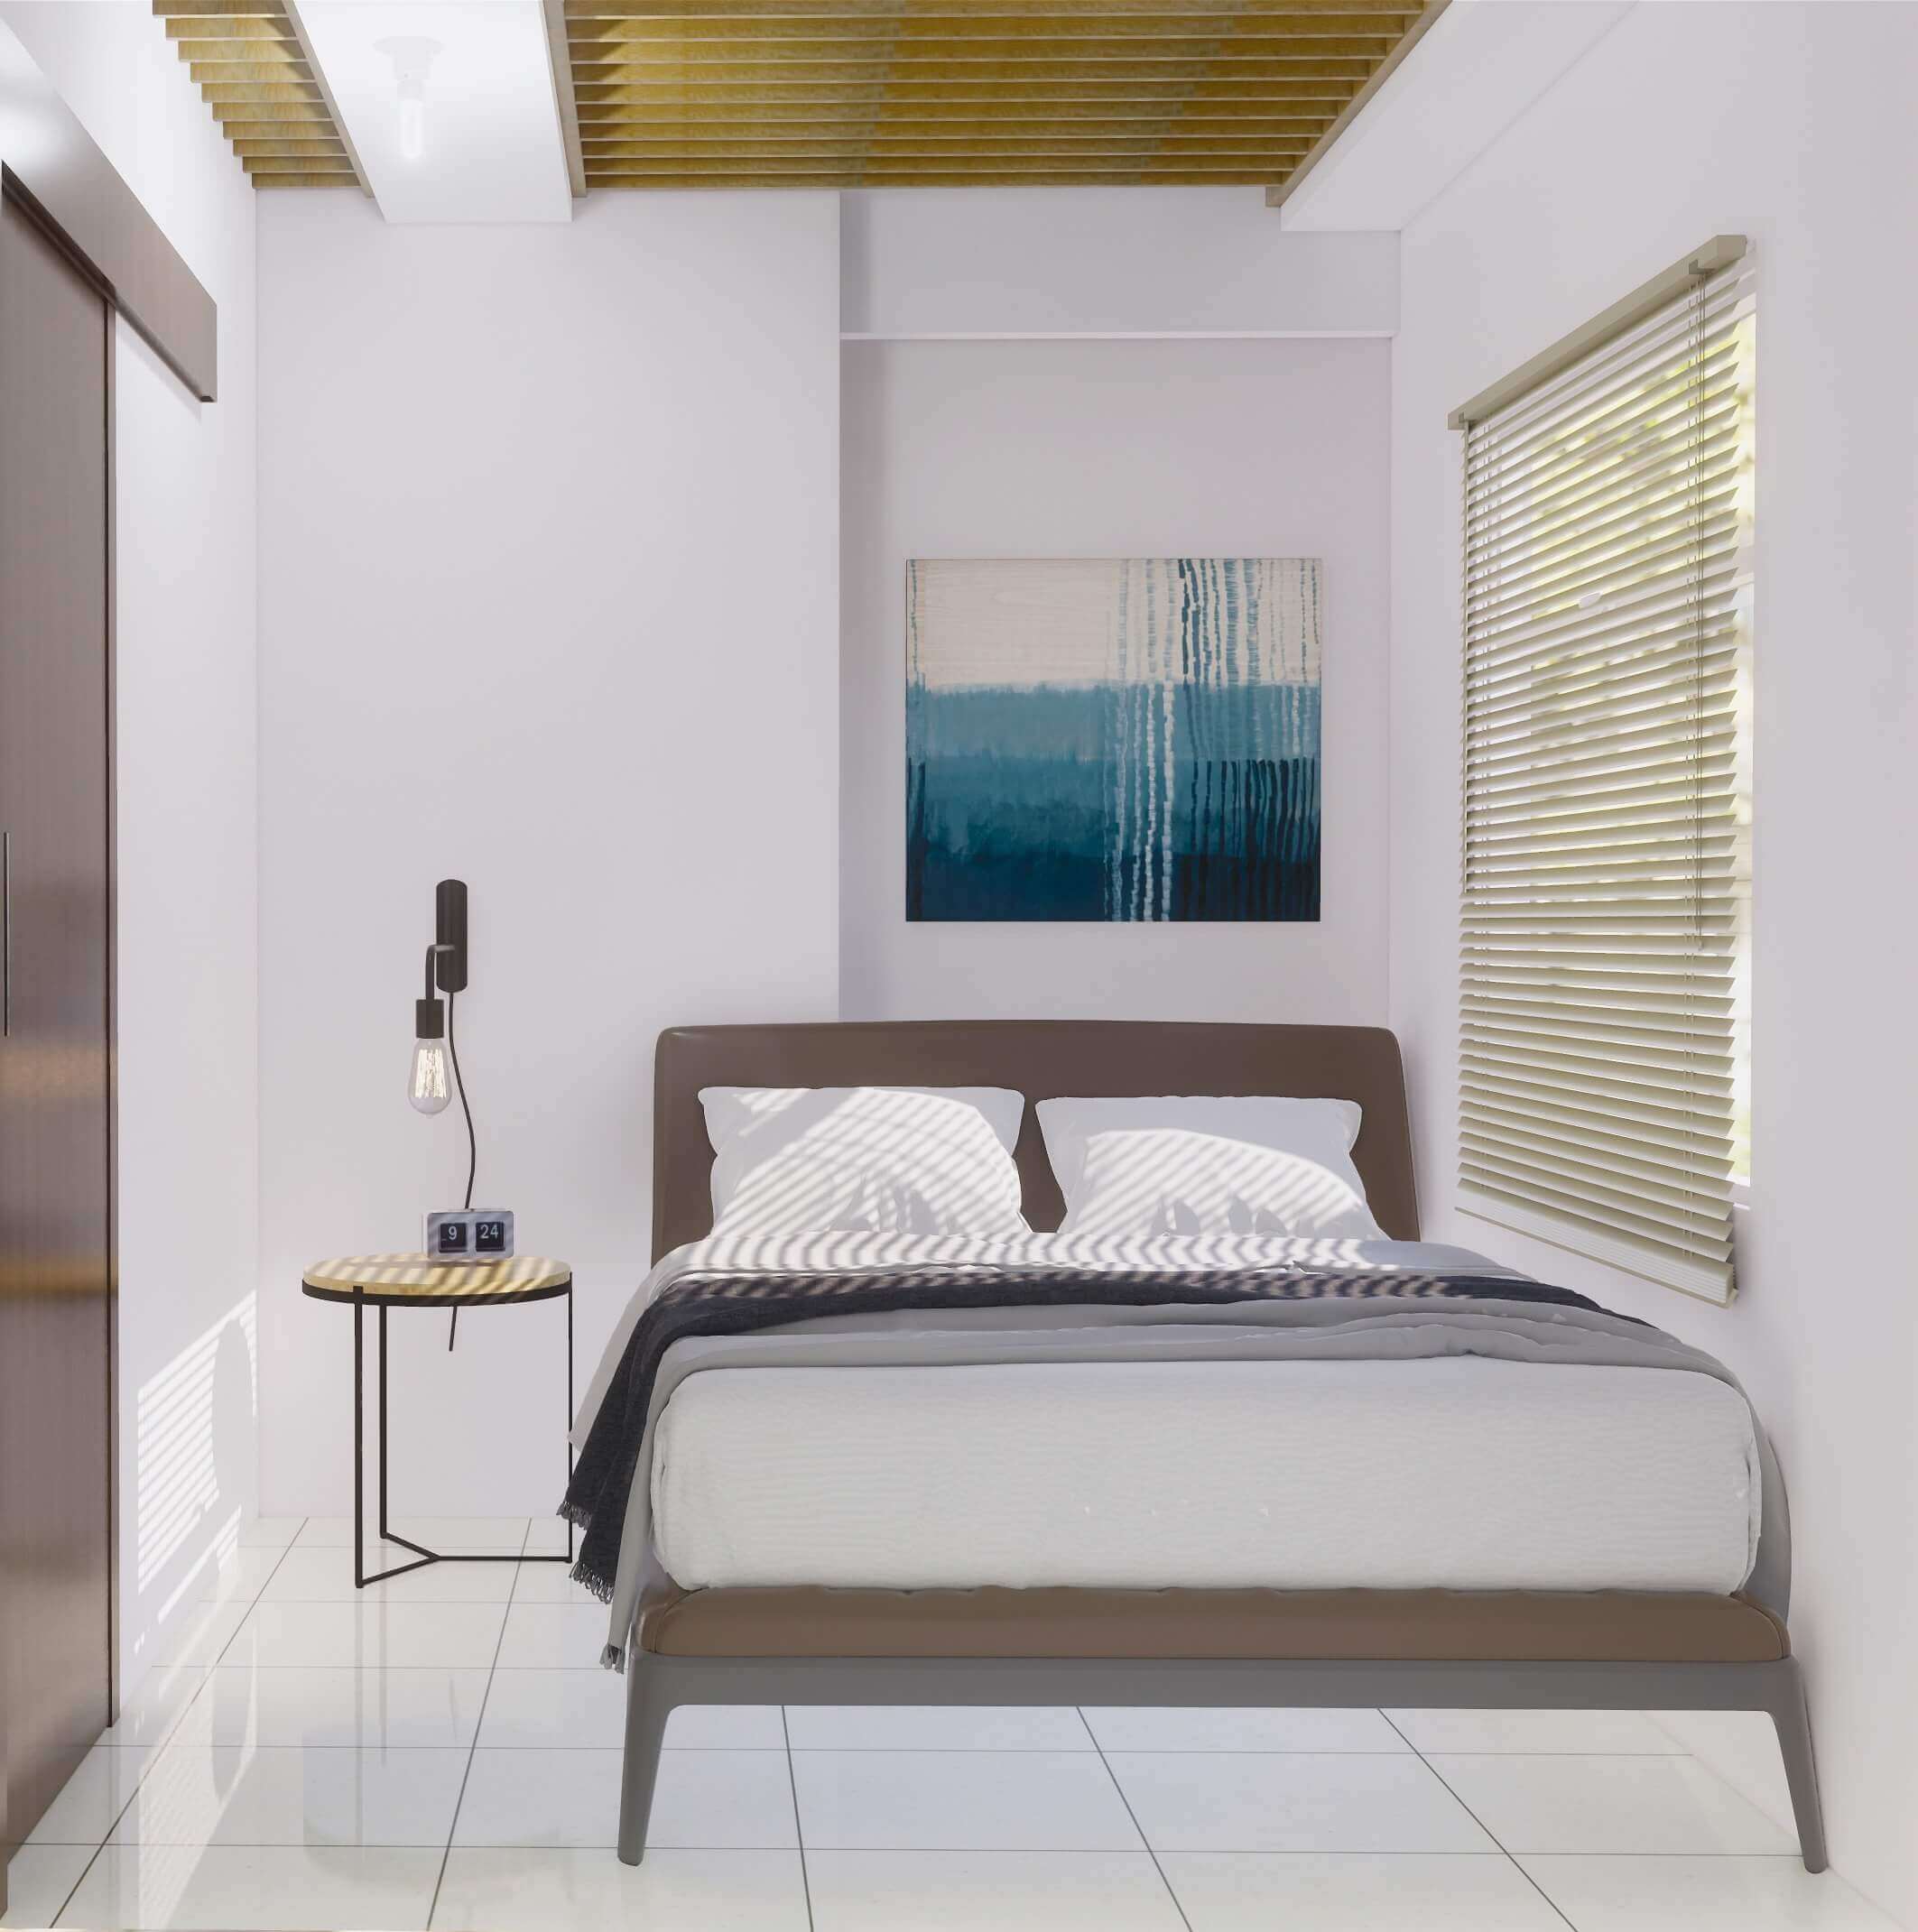 Desain interior kamar tidur modern minimalis